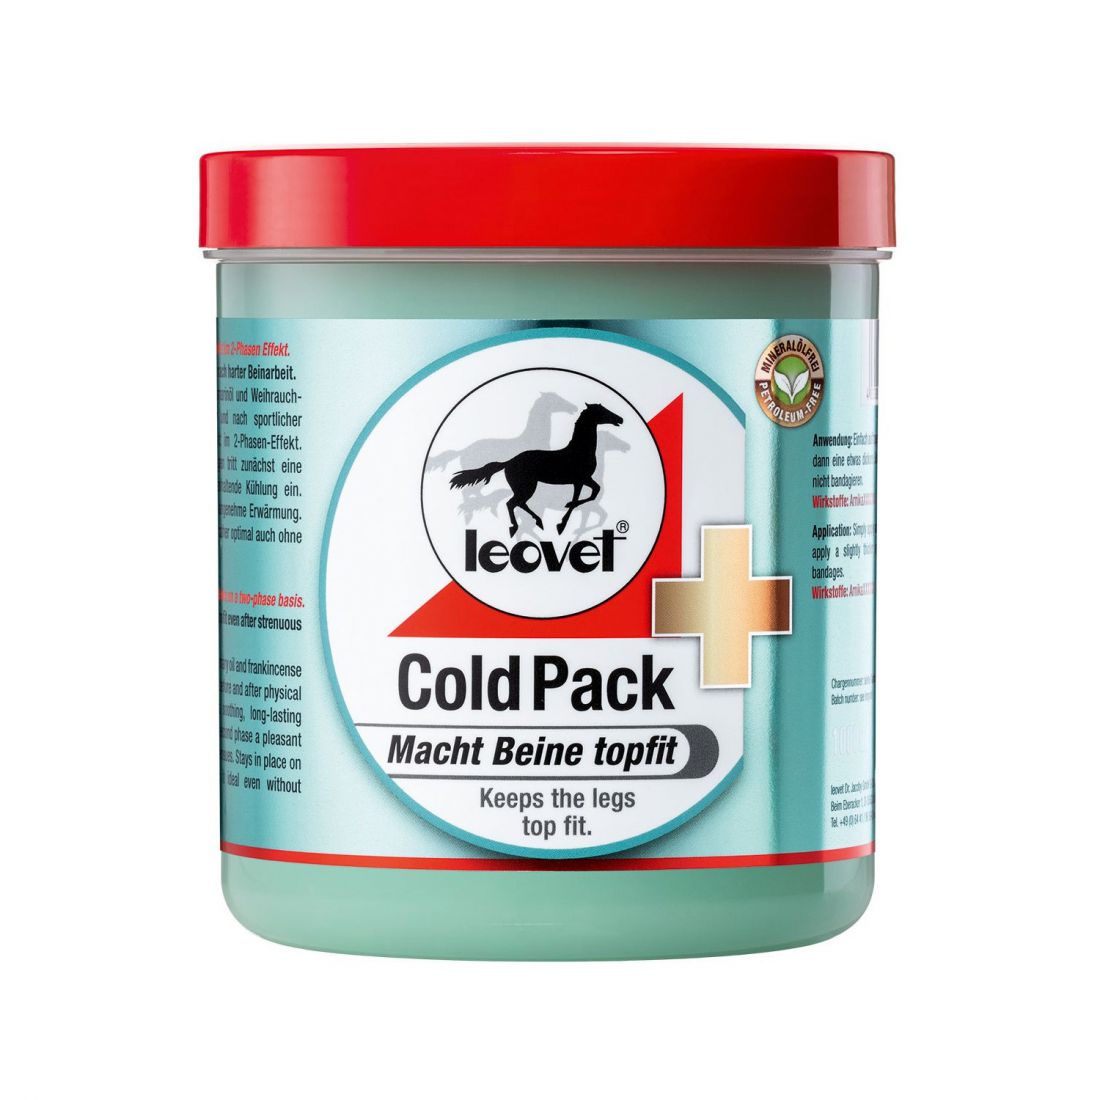 Hűtőzselé -Cold Pack, leovet